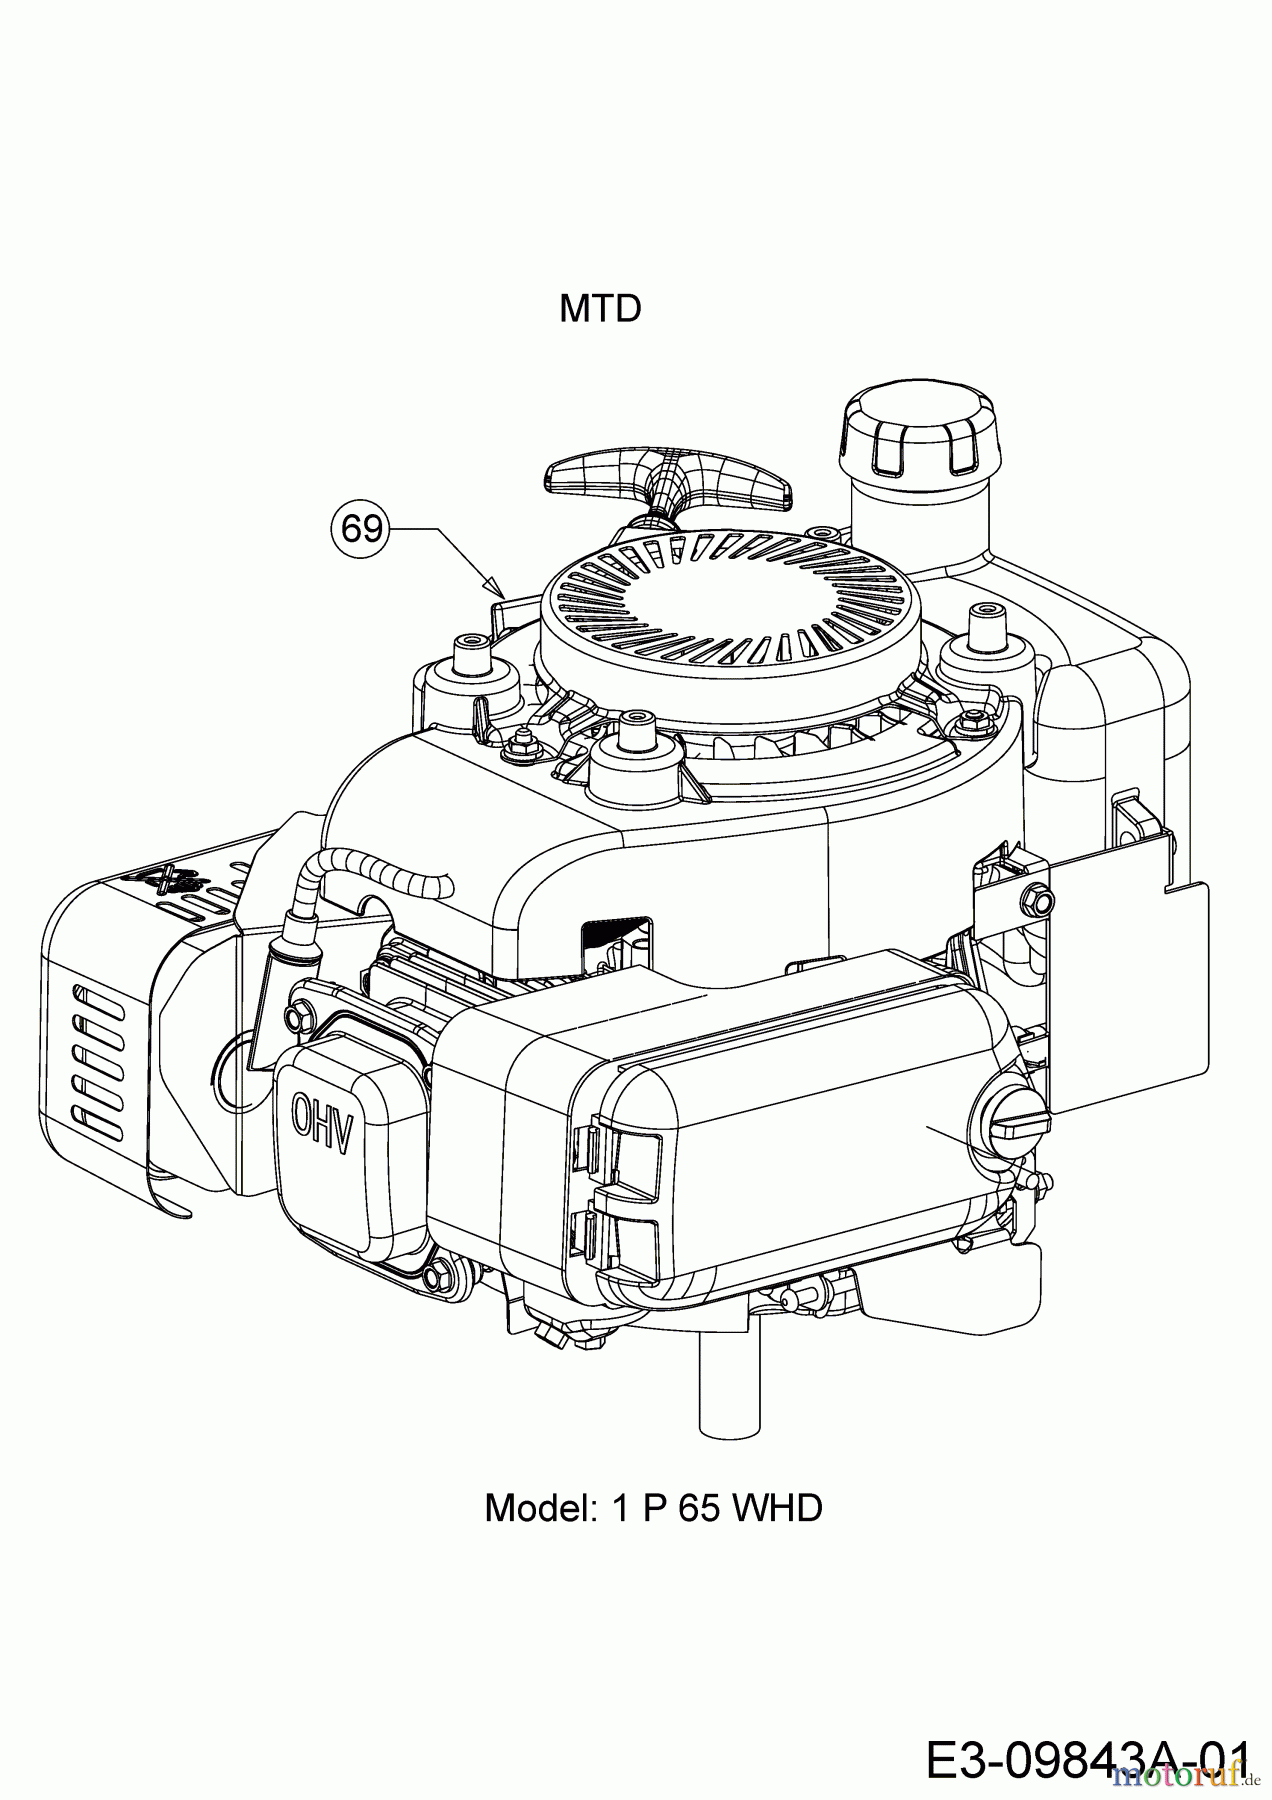  MTD Tillers T/205 21D-20MI678  (2017) Engine MTD